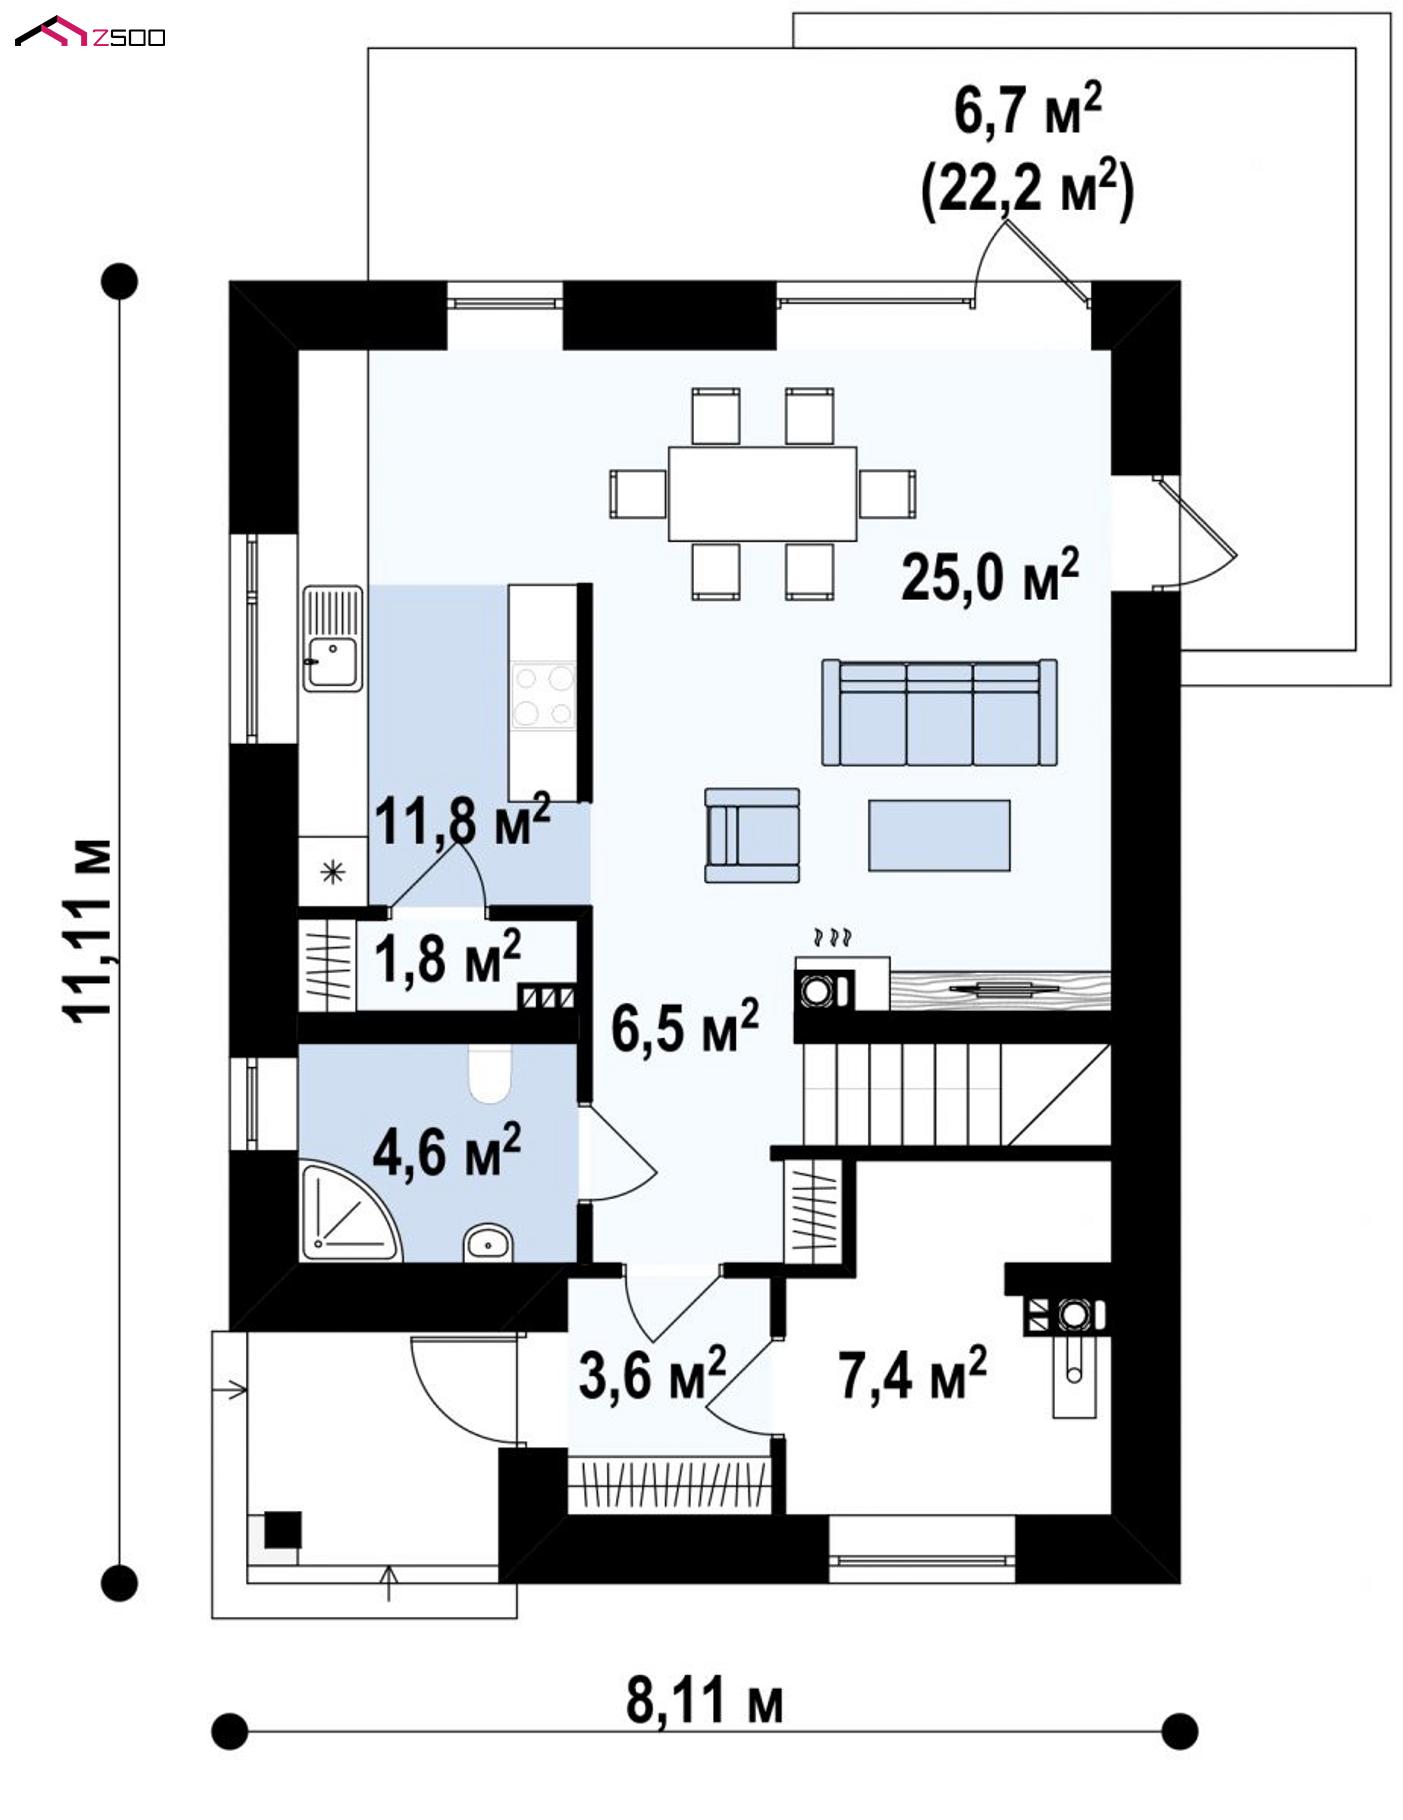 1-ый этаж - план проекта Z295